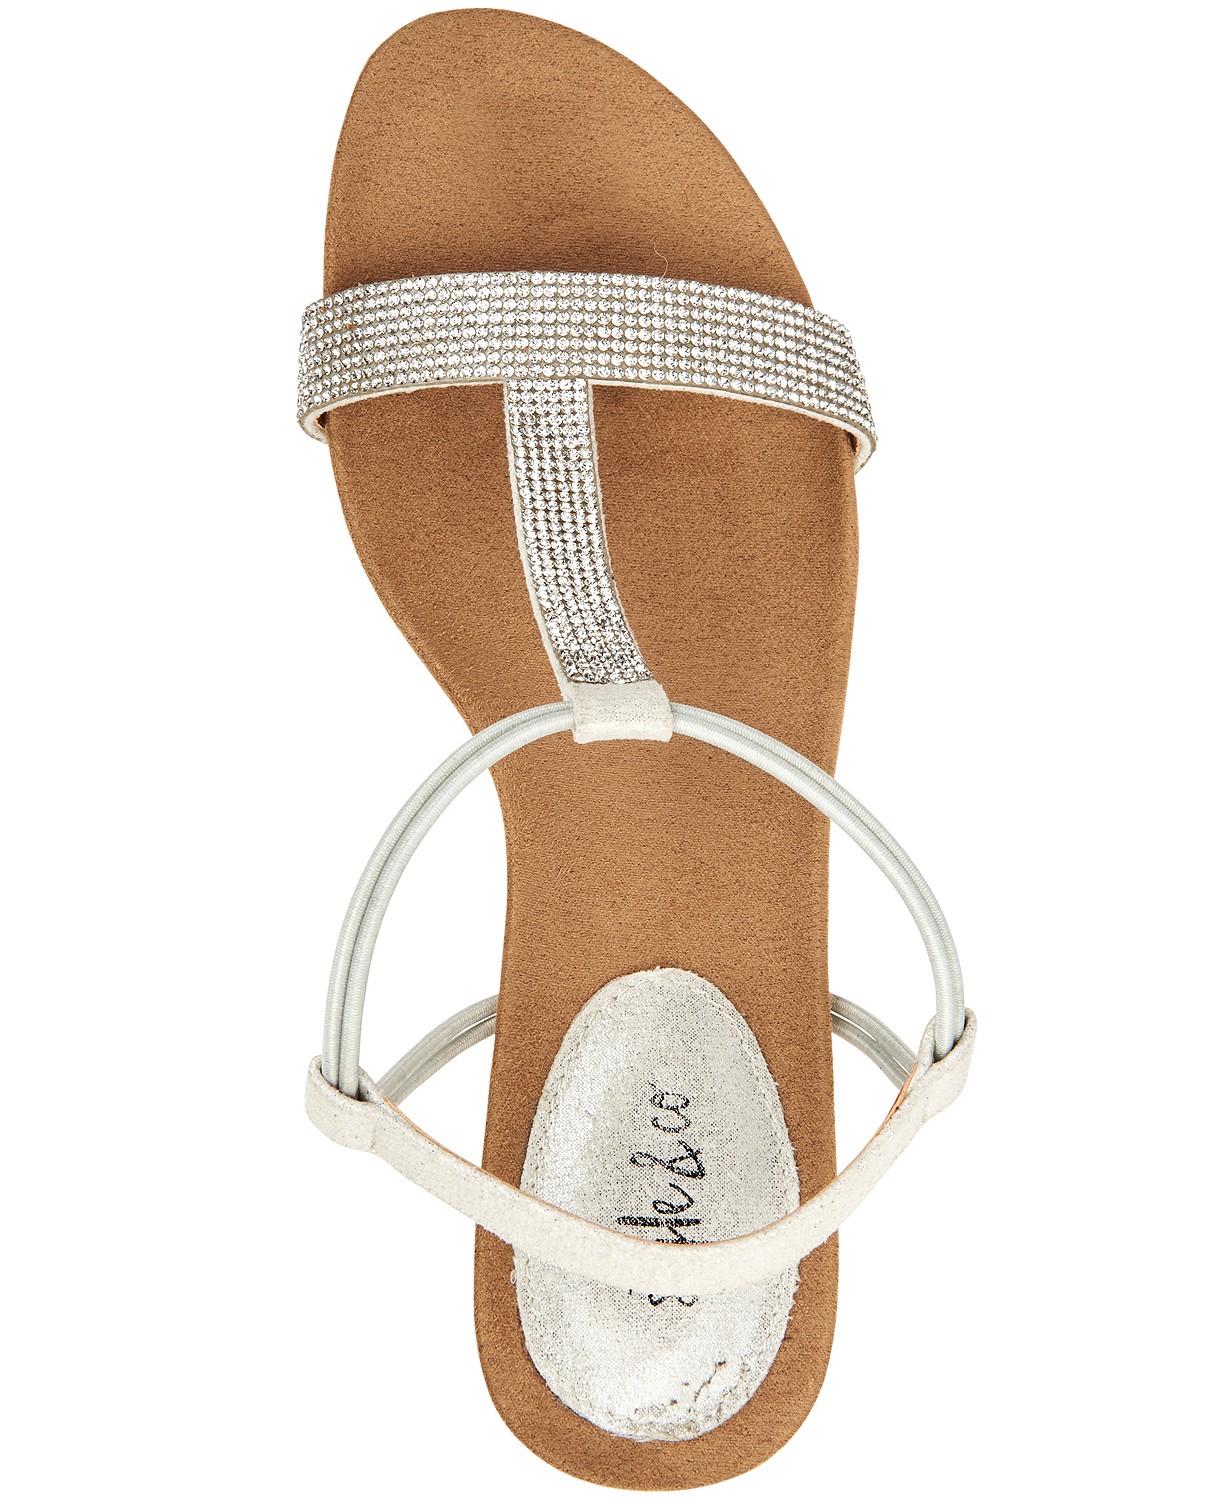 www.couturepoint.com-sun-stone-womens-white-bella-platform-wedge-sandals-copy